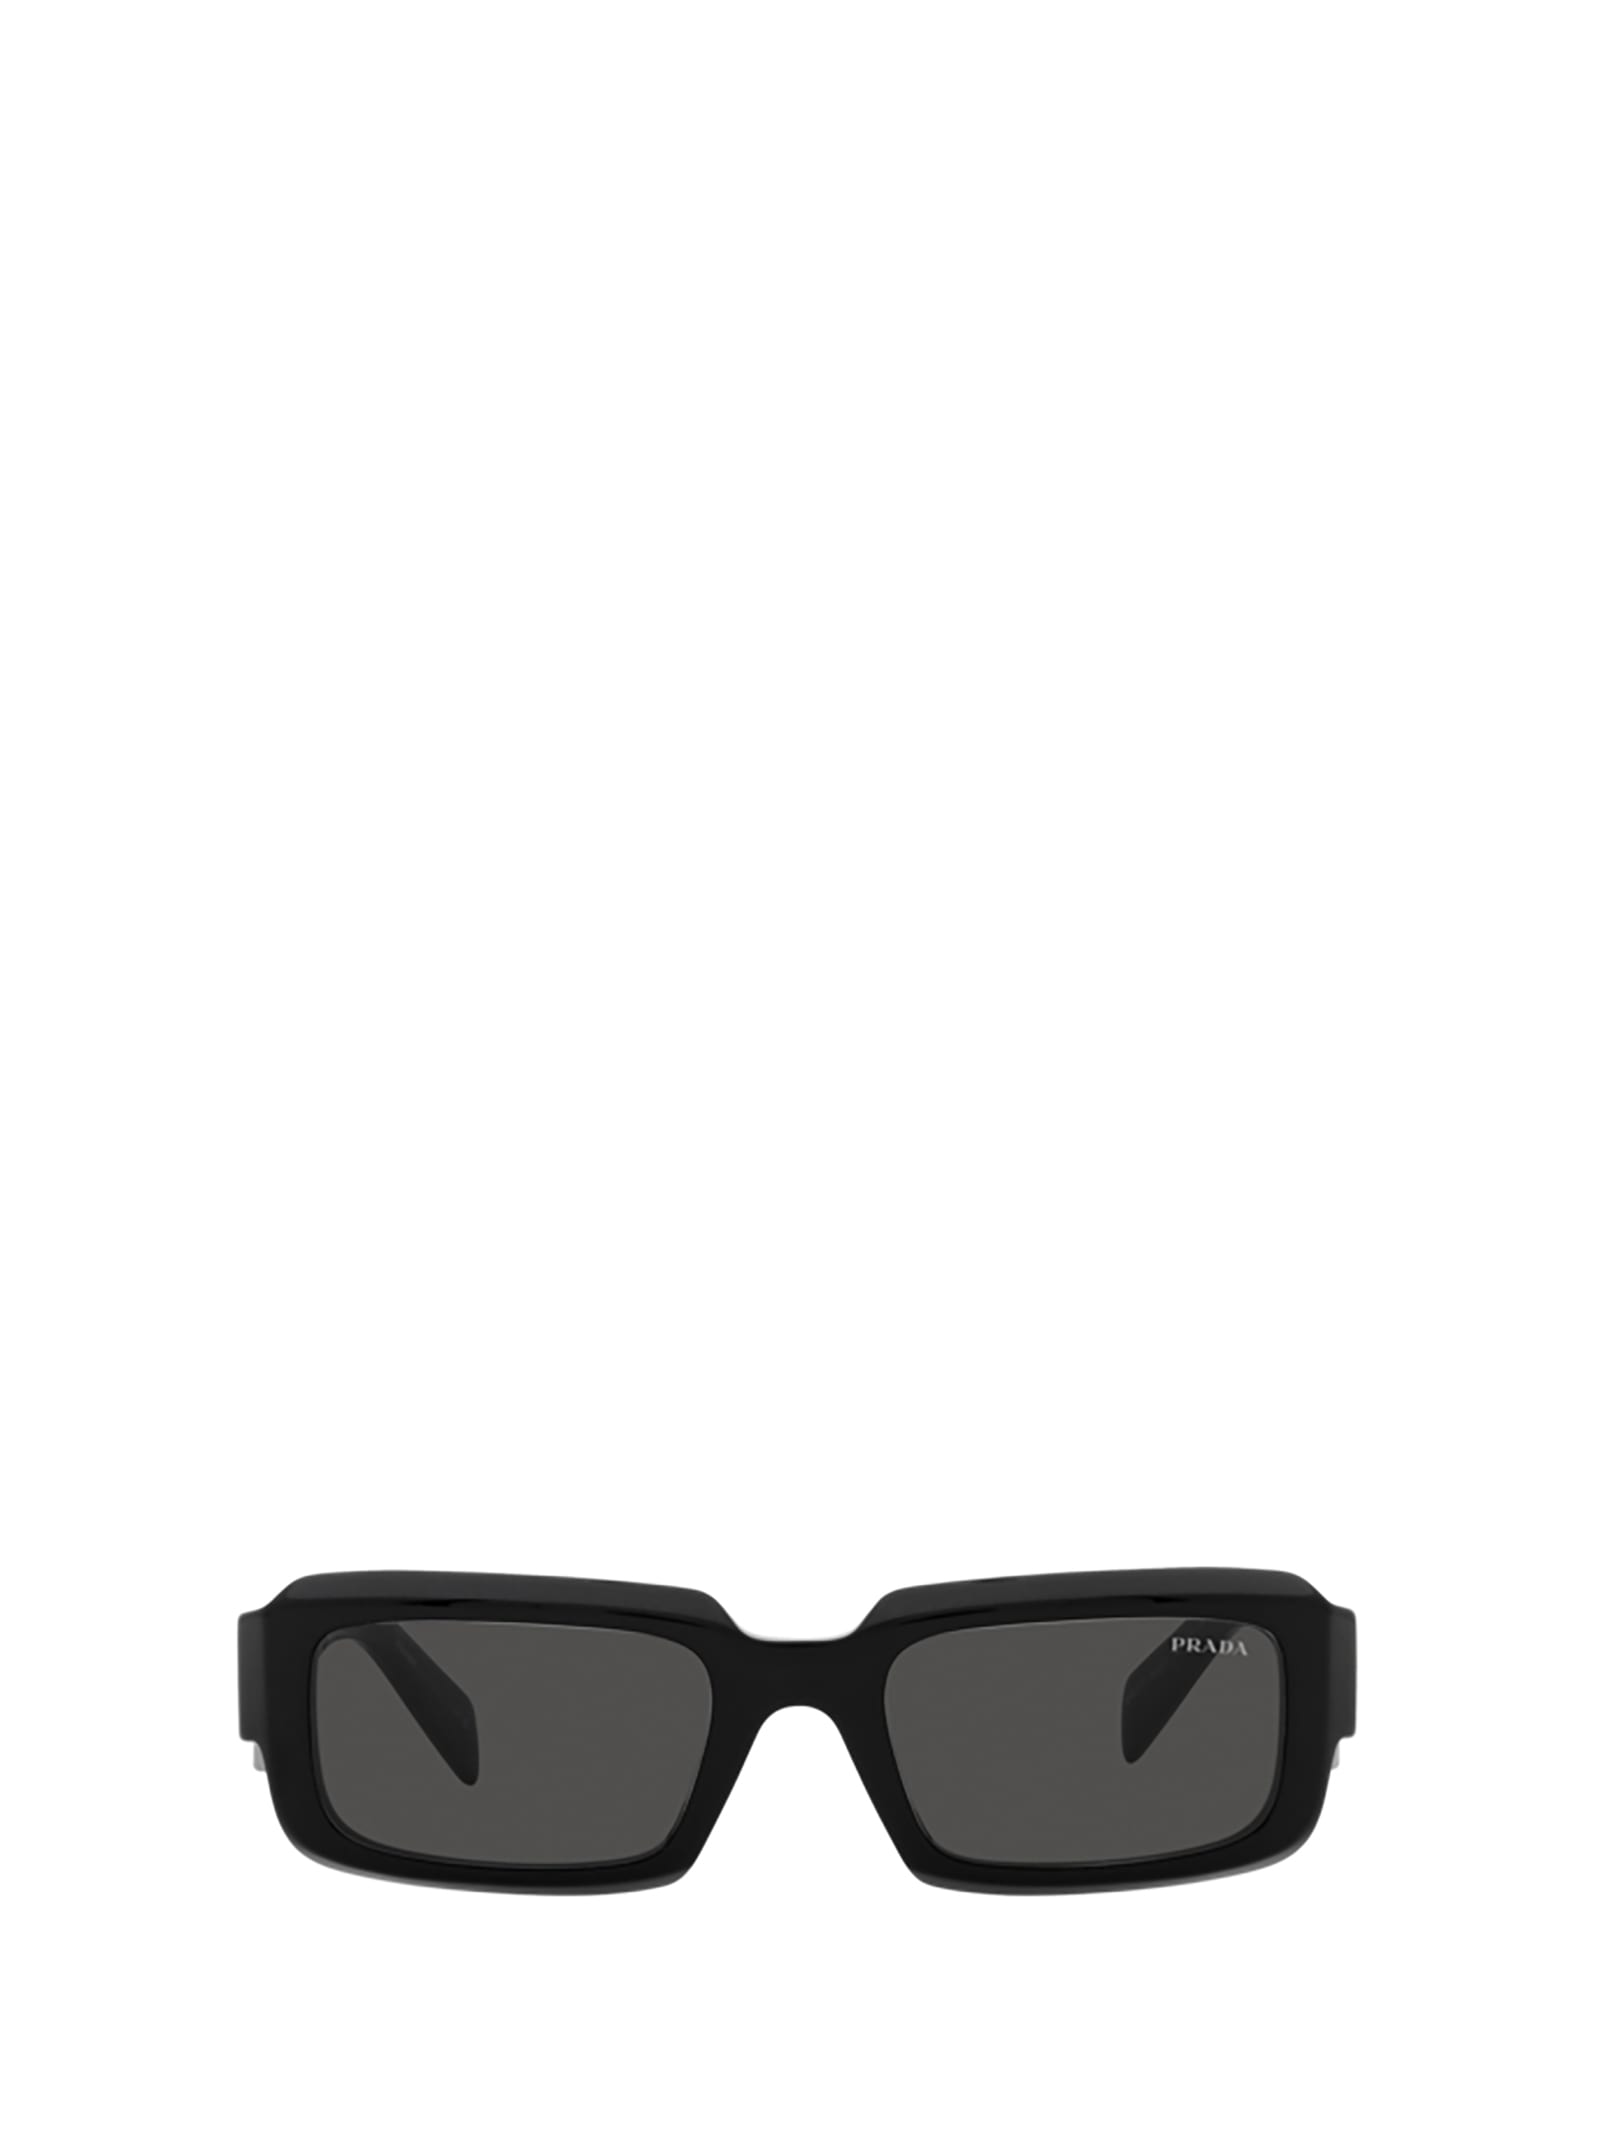 Prada Pr 27zs Black Sunglasses